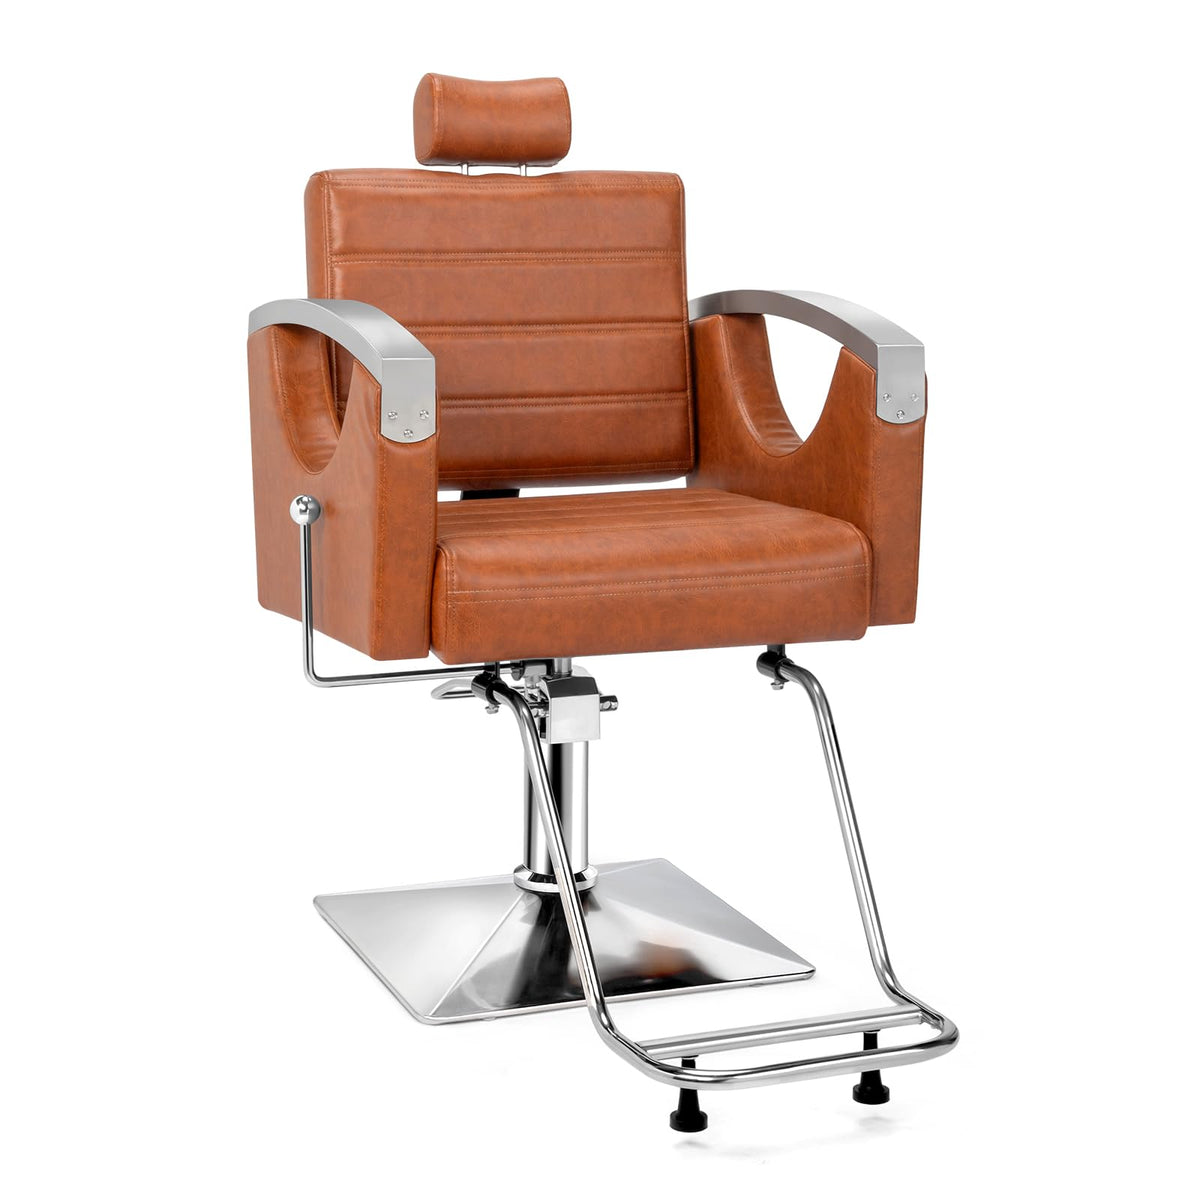 OmySalon SC2611 All Purpose Heavy Duty Hydraulic Reclining Hair Salon Chair w/Headrest and Stainless Steel Armrest